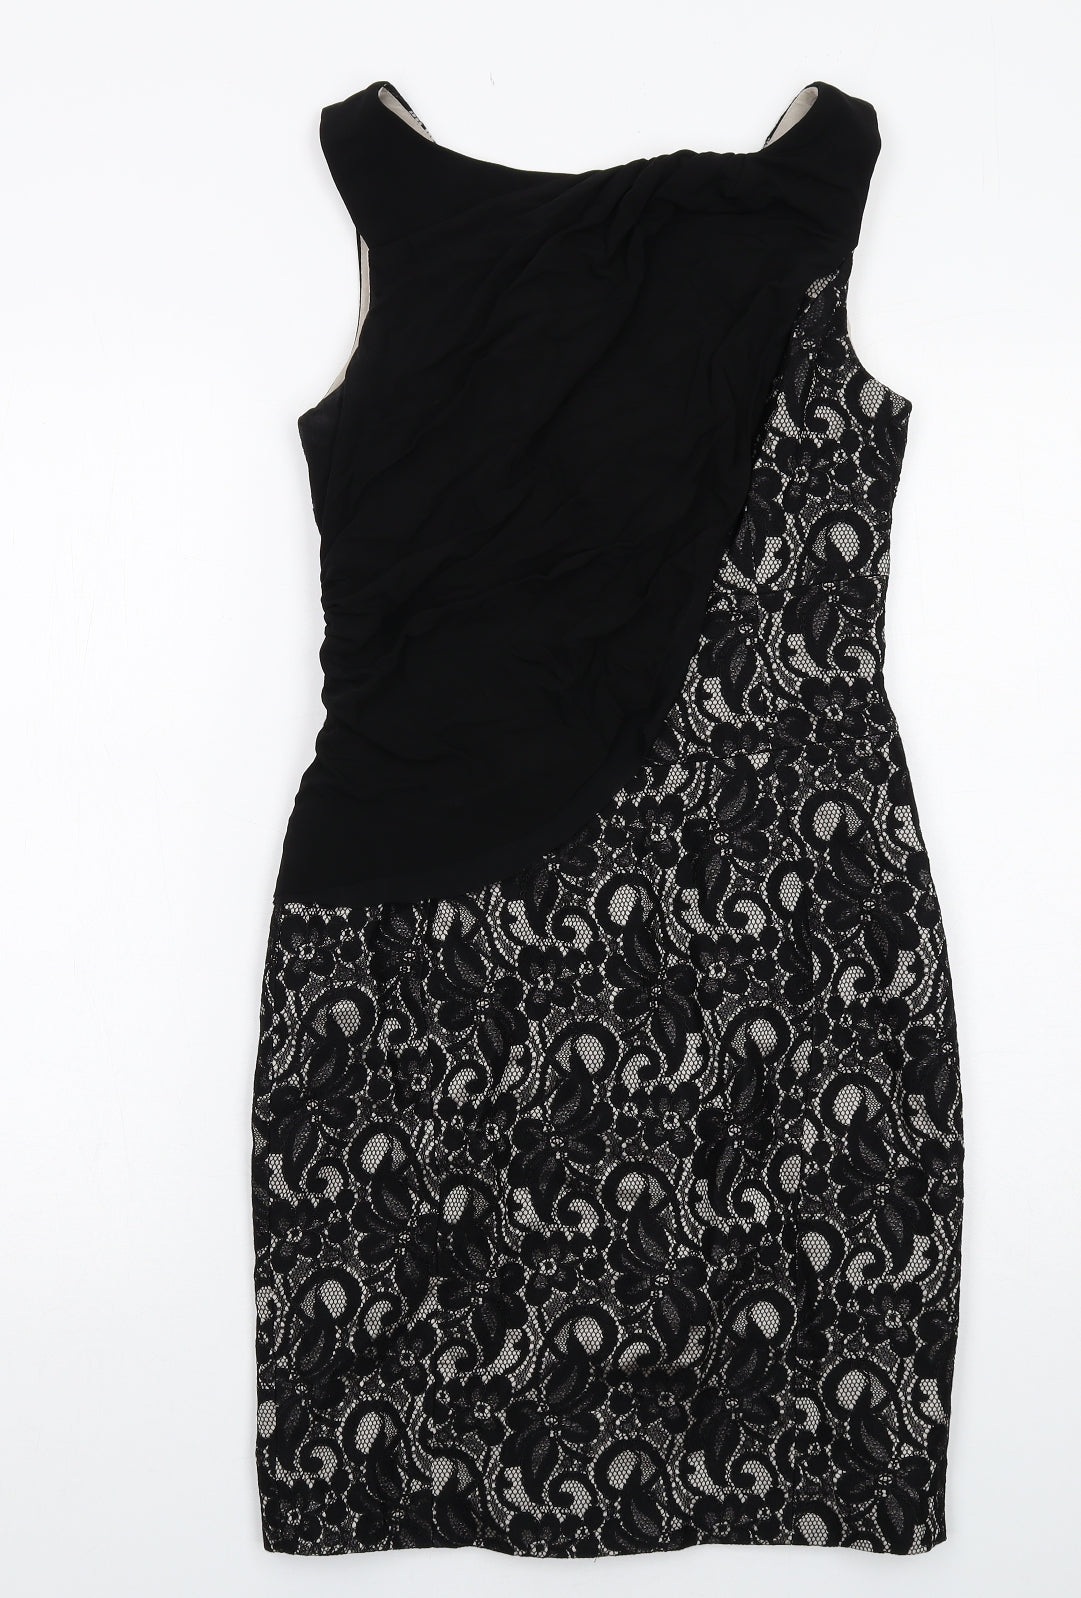 Karen Millen Womens Black Floral Viscose Shift Size 12 Boat Neck Zip